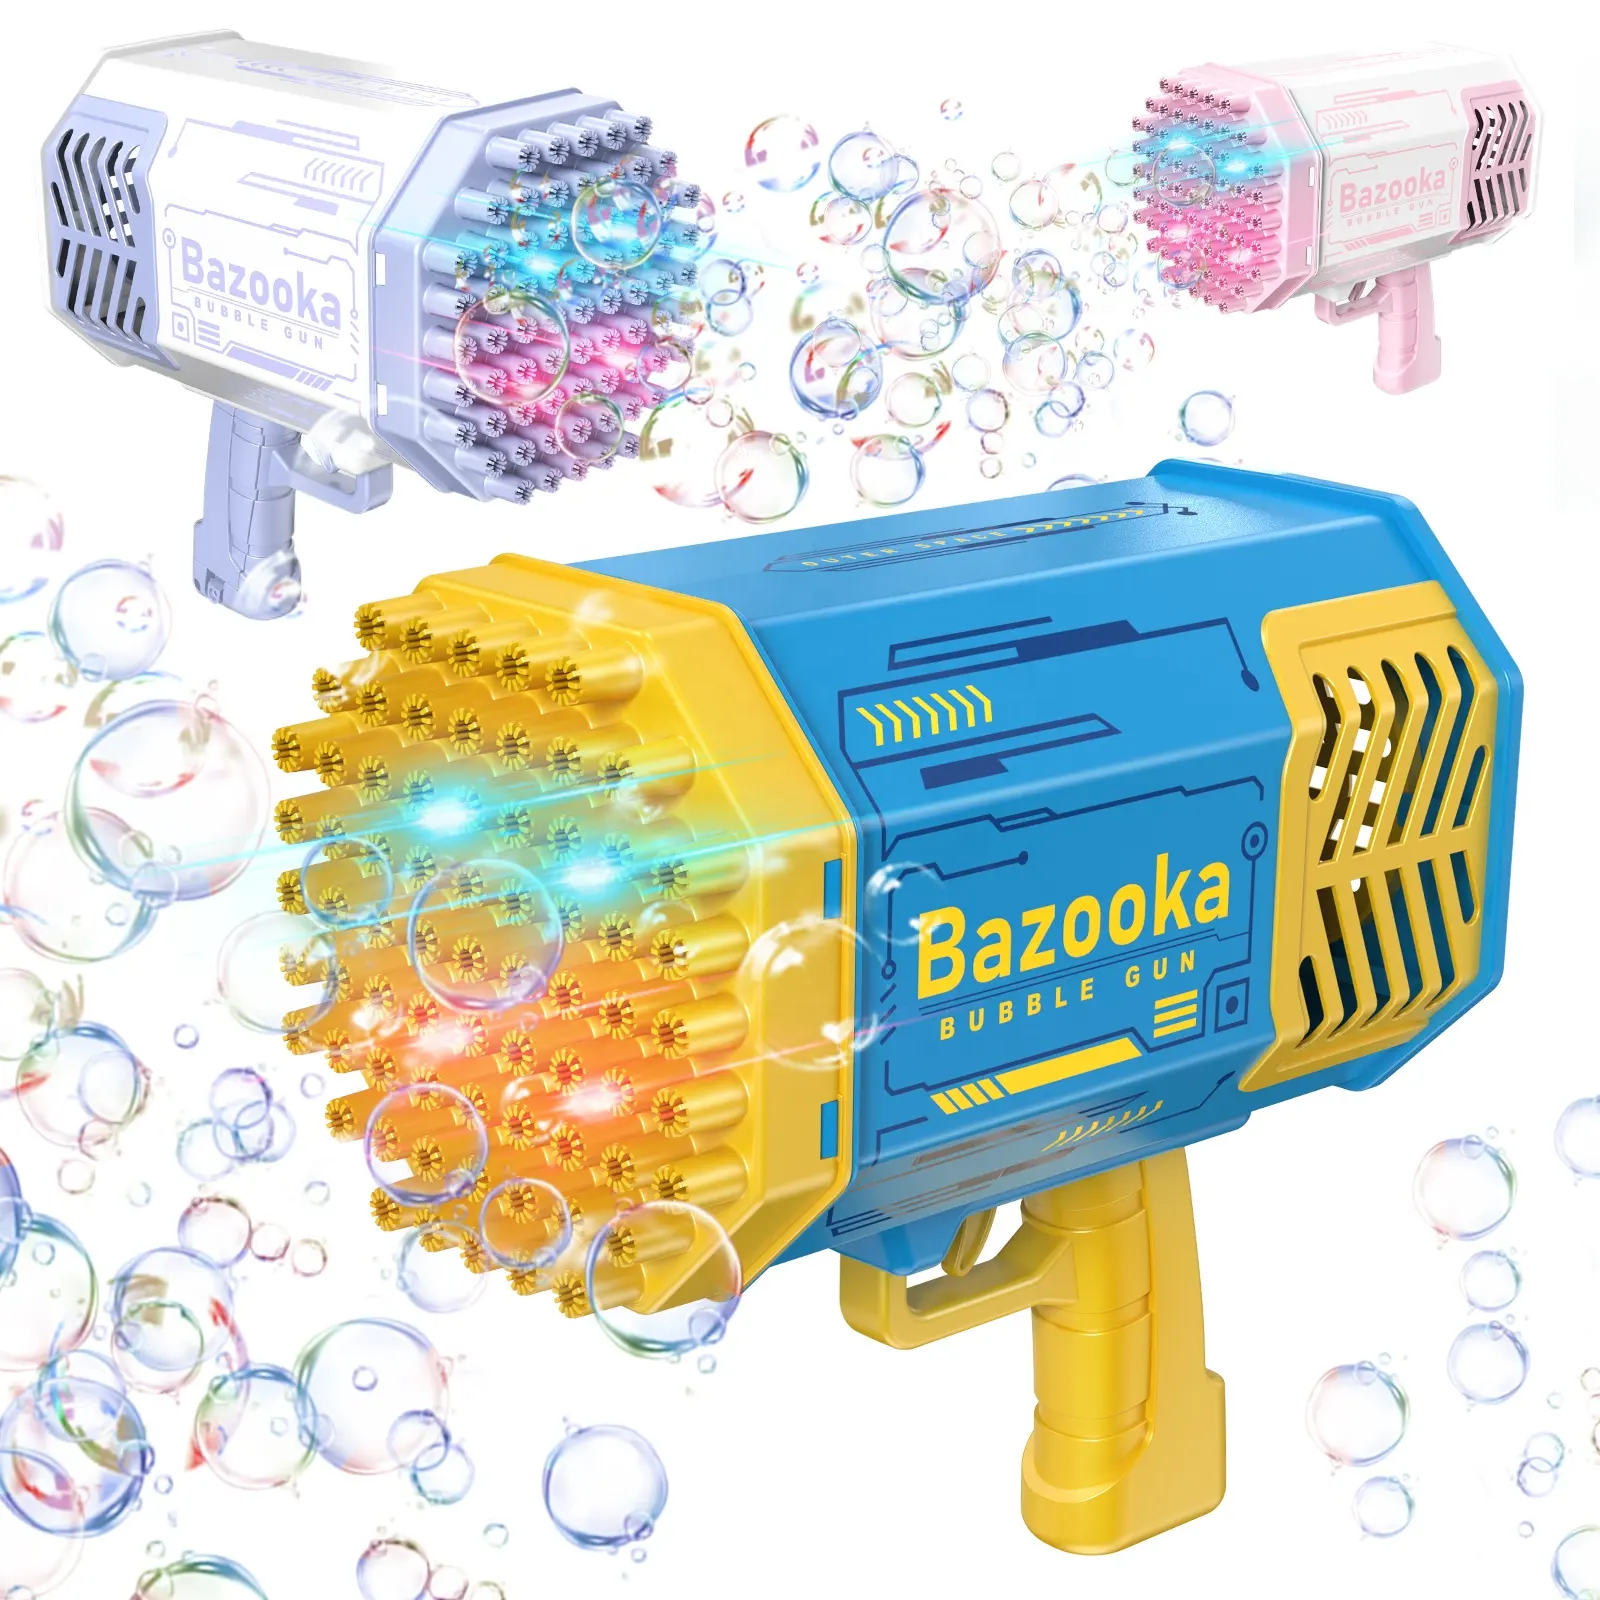 Ubble-pistola de jabón automática con luz para niños, pistola de burbujas de bazooka con luz para edding